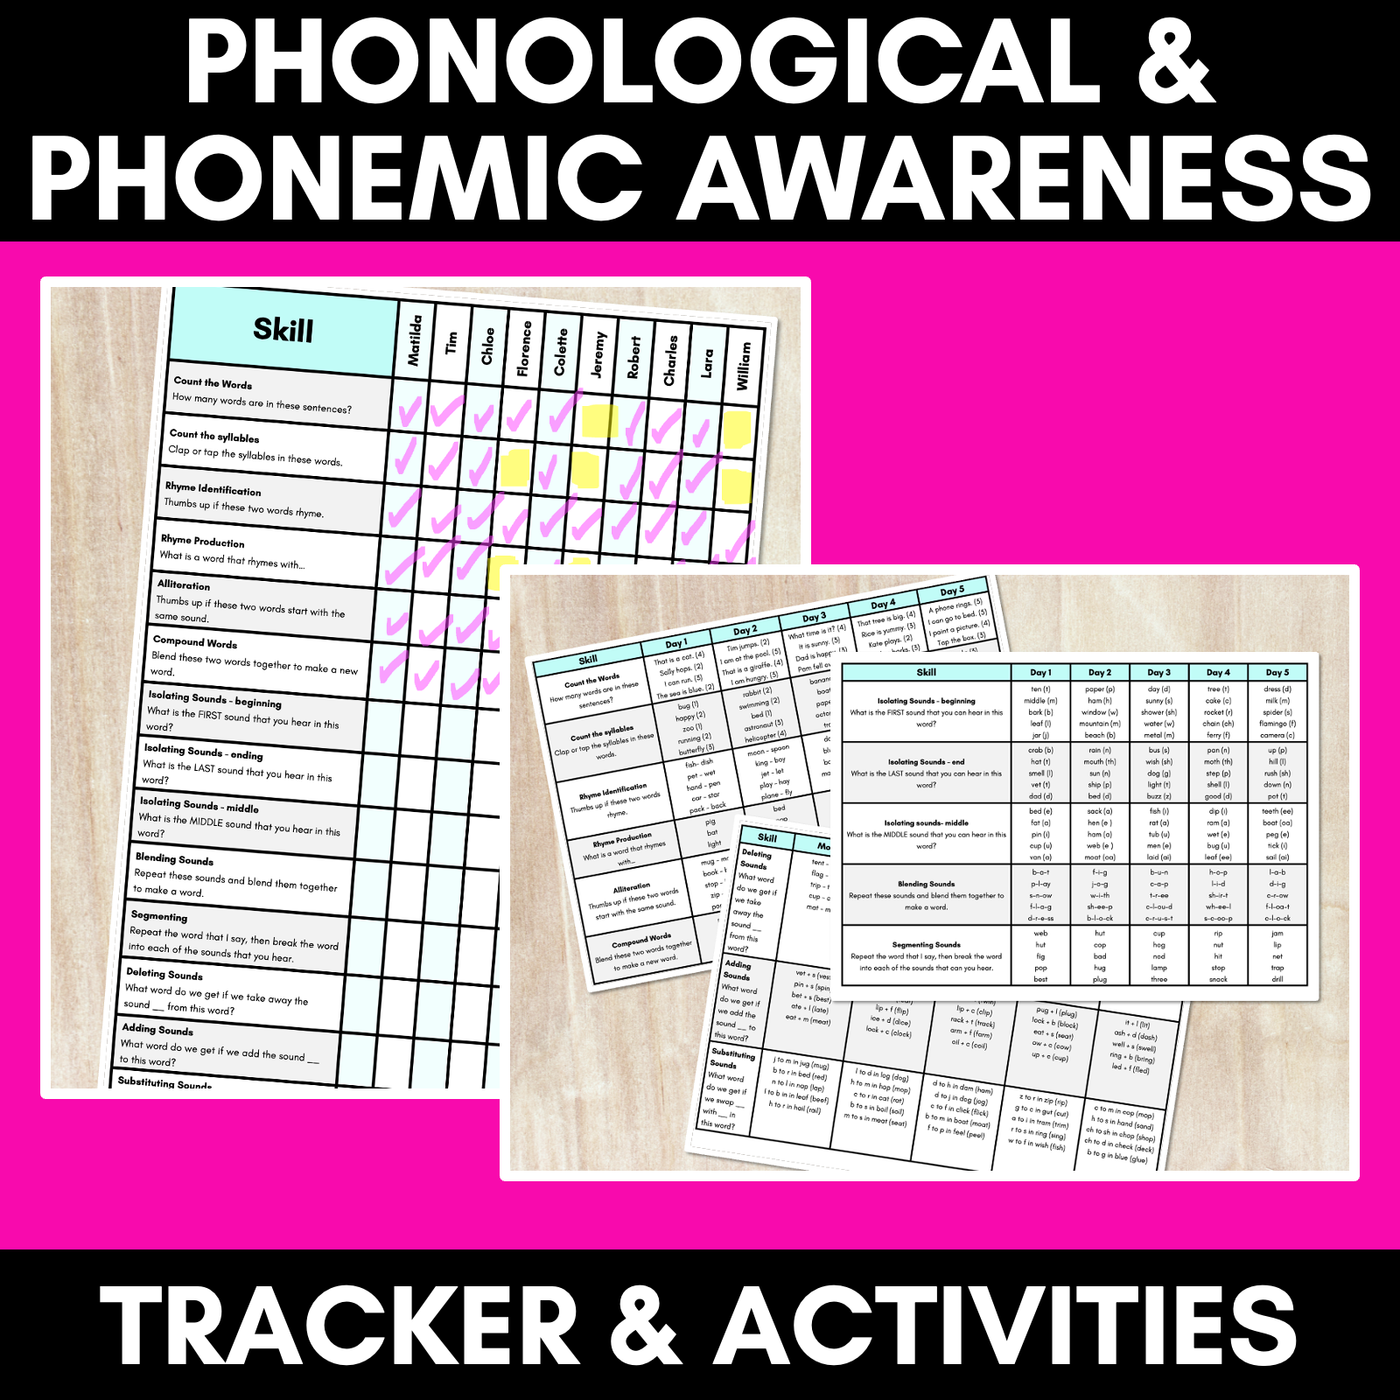 Phonological Awareness Skills Assessment Tracker & Sample Activities